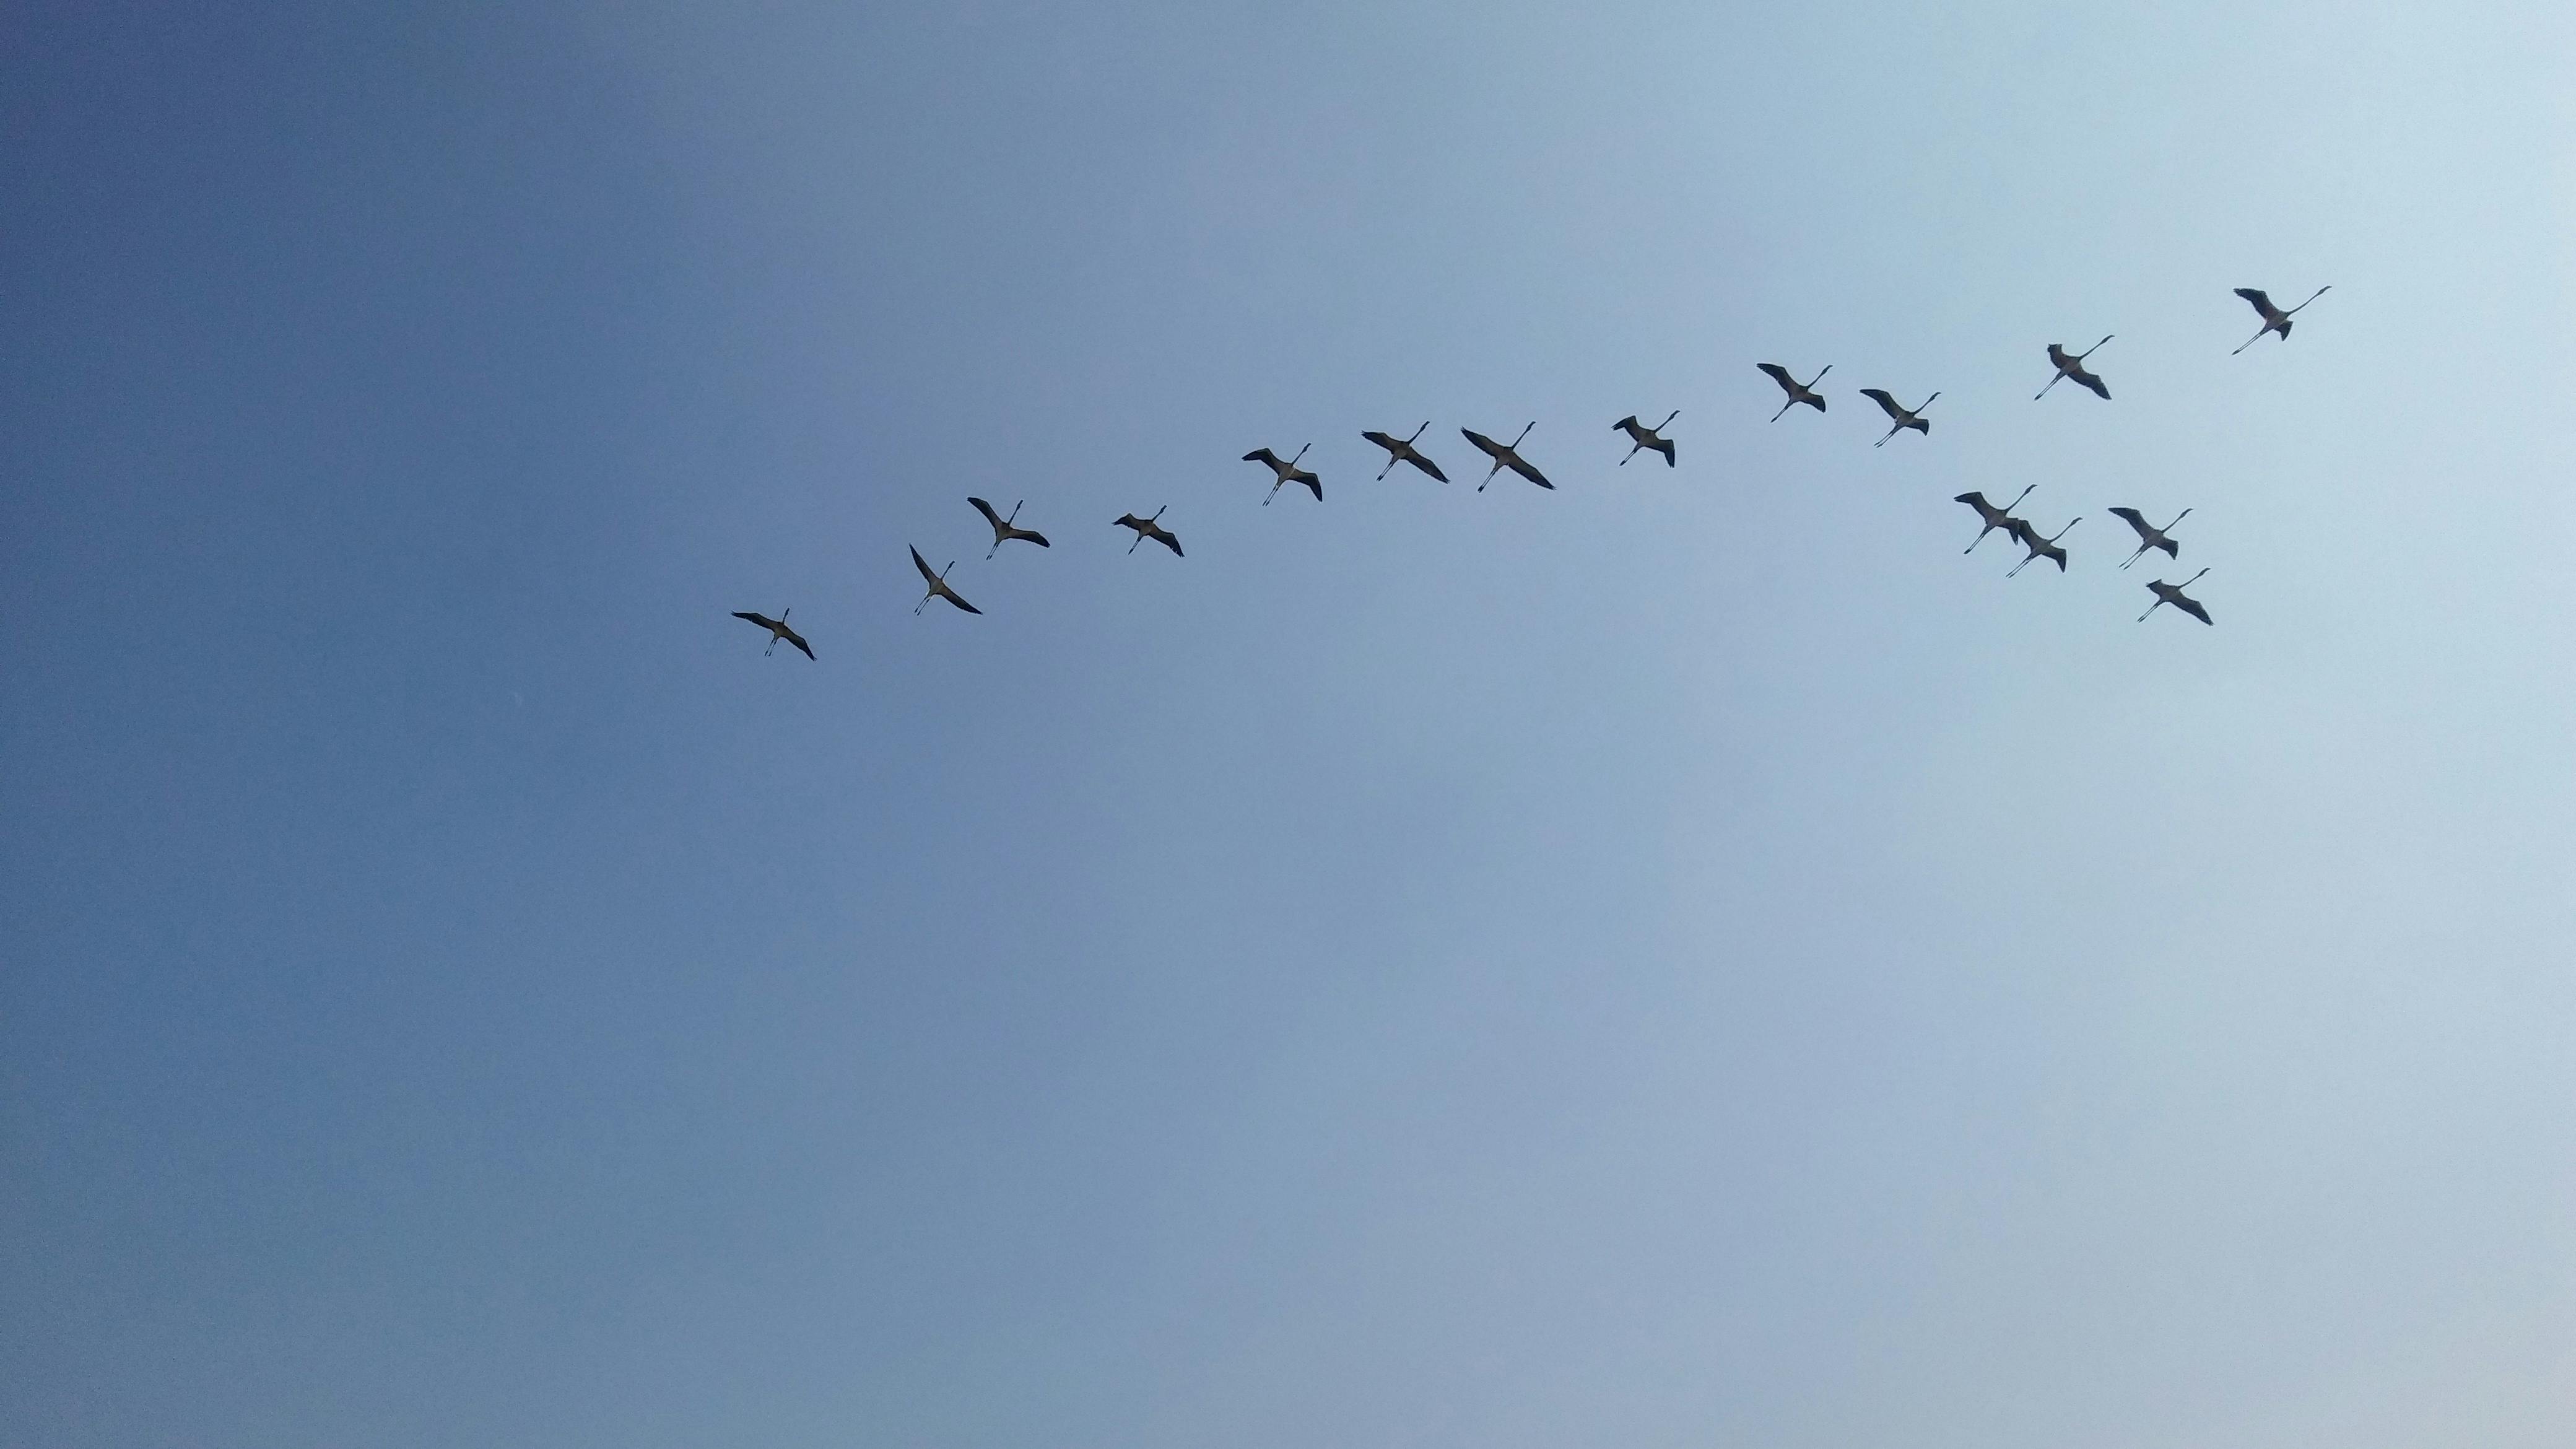 Free stock photo of birds, cranes flying